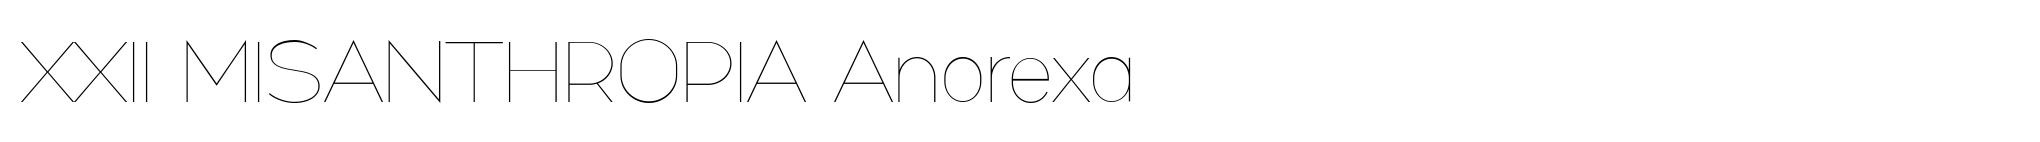 XXII MISANTHROPIA Anorexa image